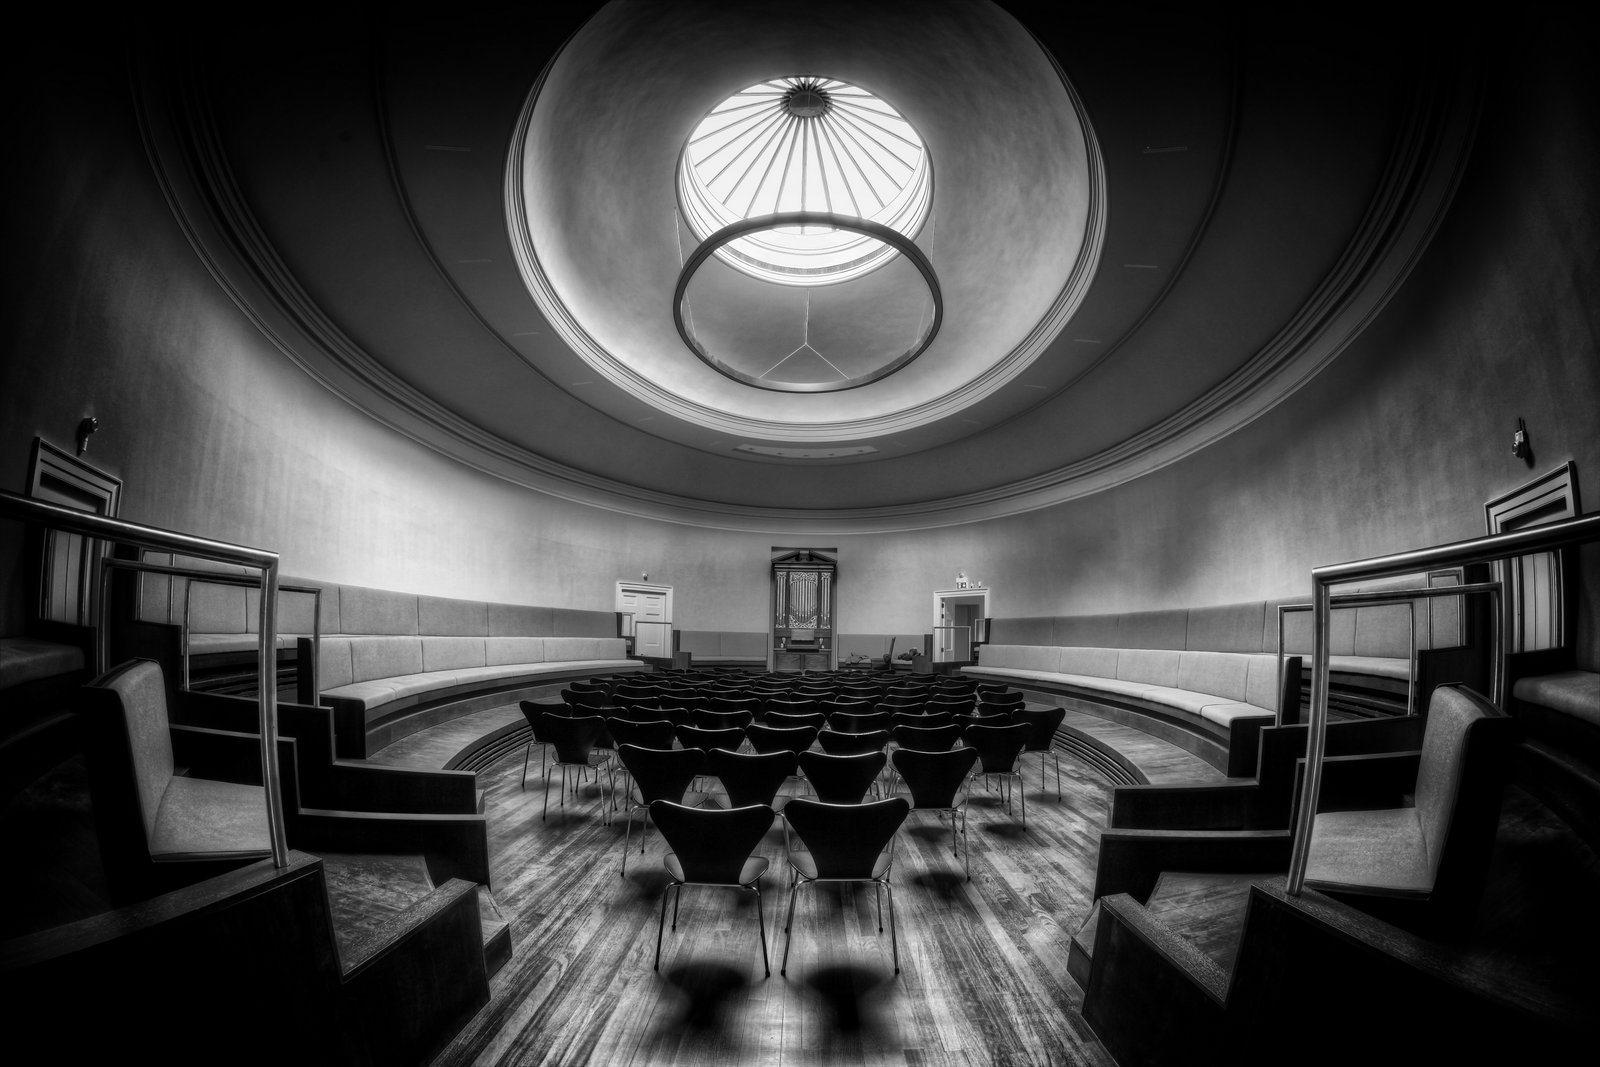 Photo of the Concert Room by Dark Edinburgh